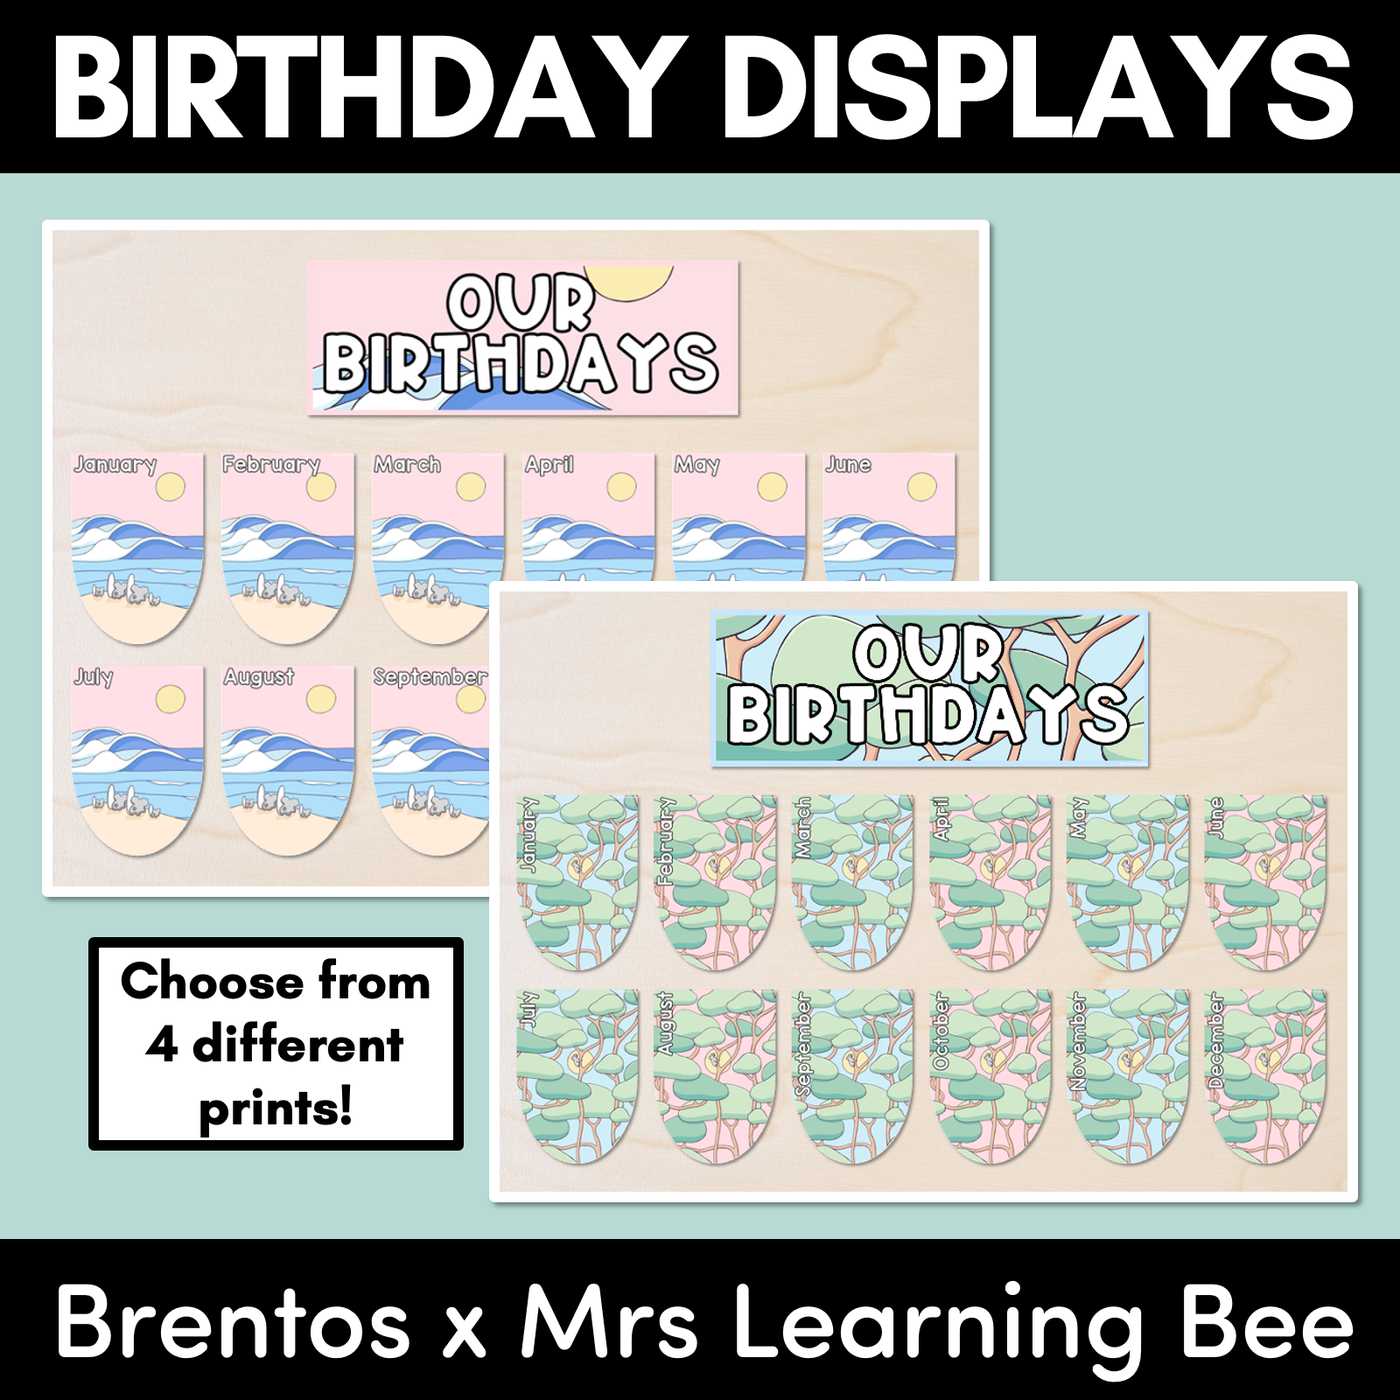 BIRTHDAYS DISPLAYS - The Brentos Collection